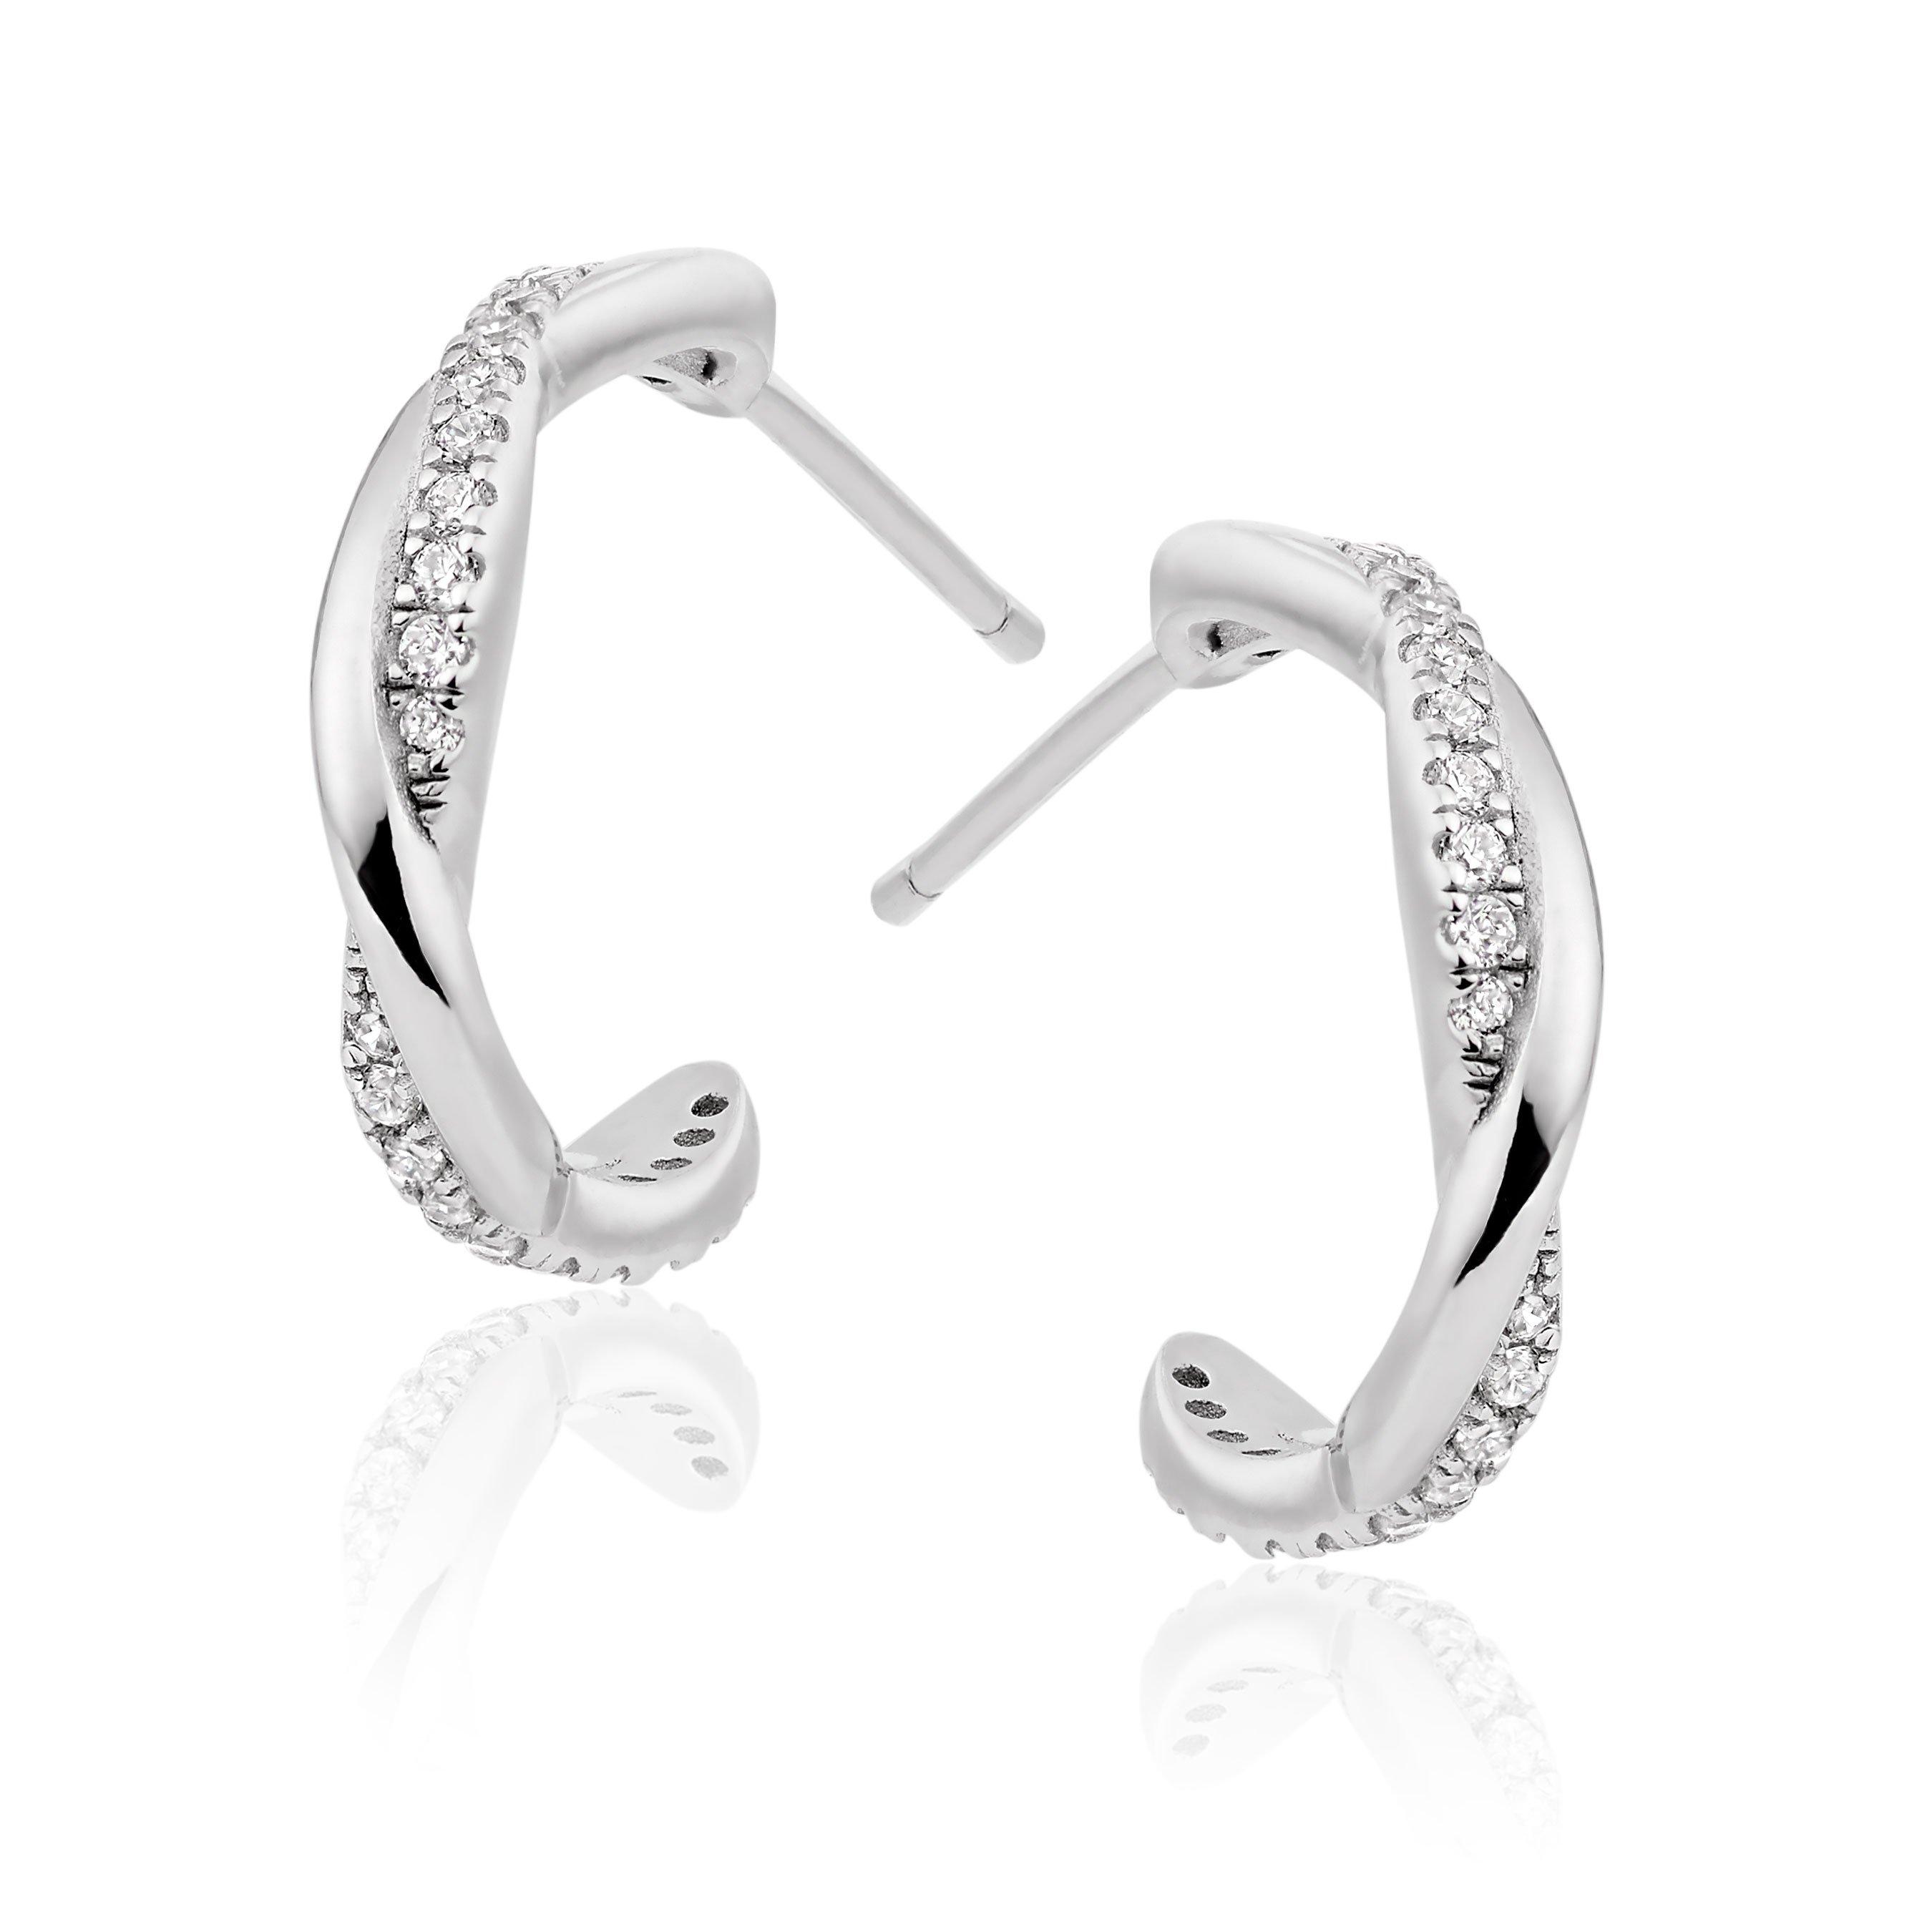 Silver Cubic Zirconia Twist Earrings | 0120187 | Beaverbrooks the